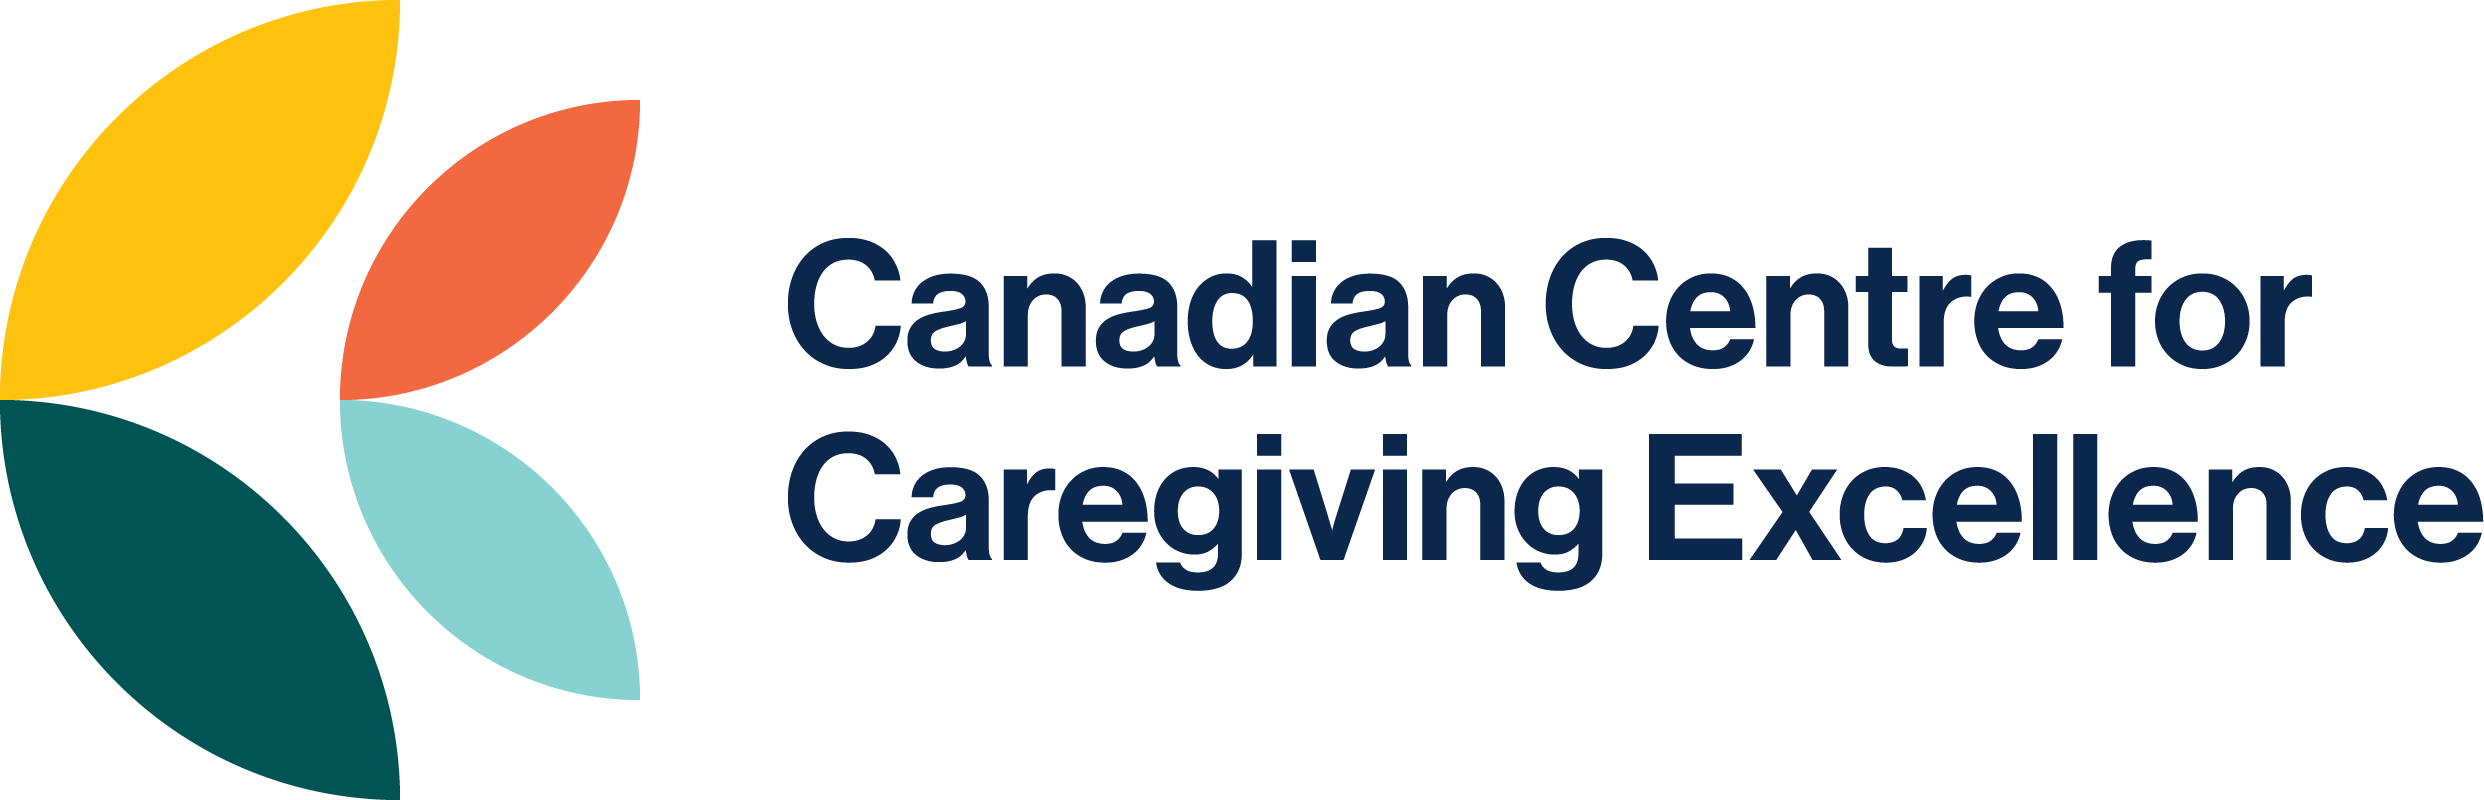 Canadian Centre for Caregiving Excellence logo